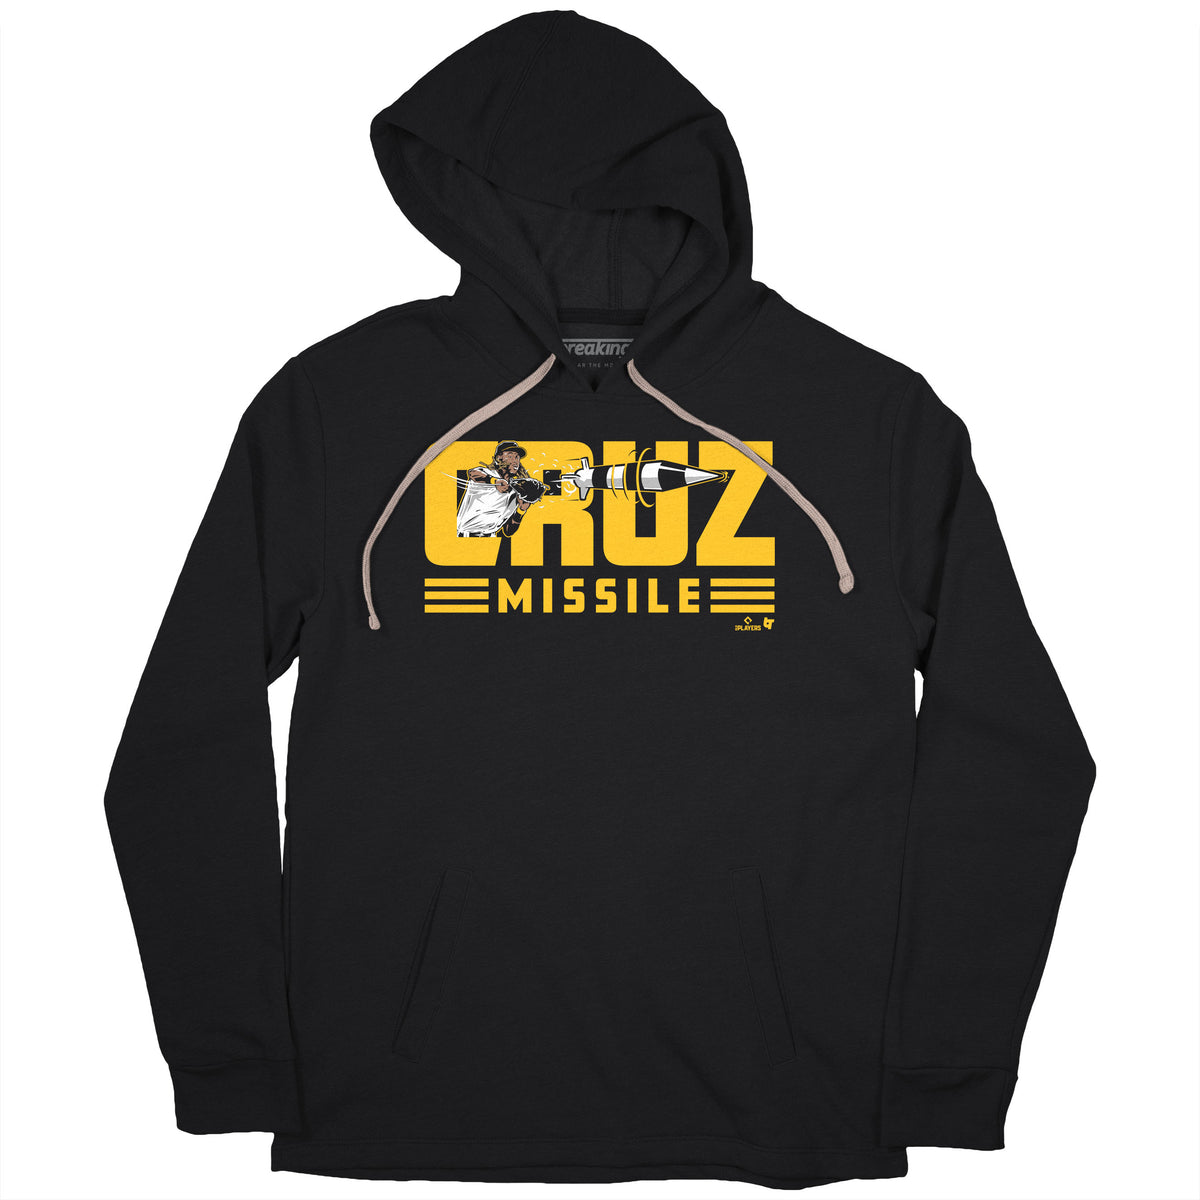 Oneil Cruz Gifts & Merchandise for Sale